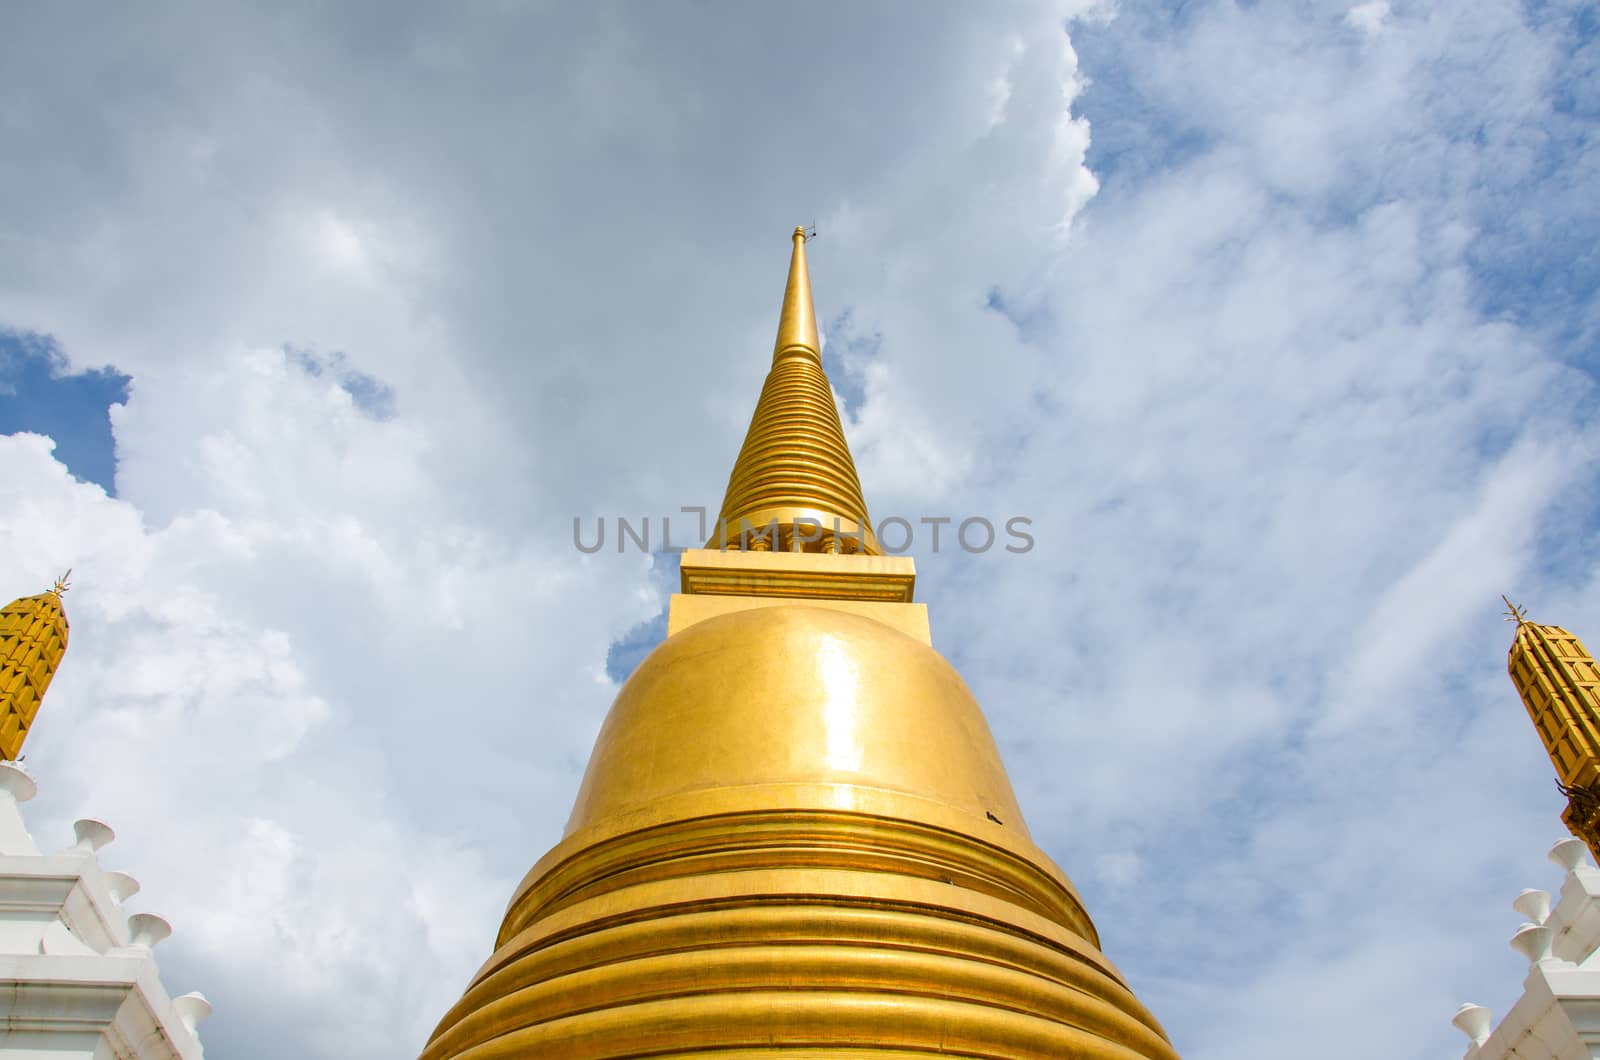 Golden Chedi Wat Bowonniwet Vihara, Bangkok, Thailand